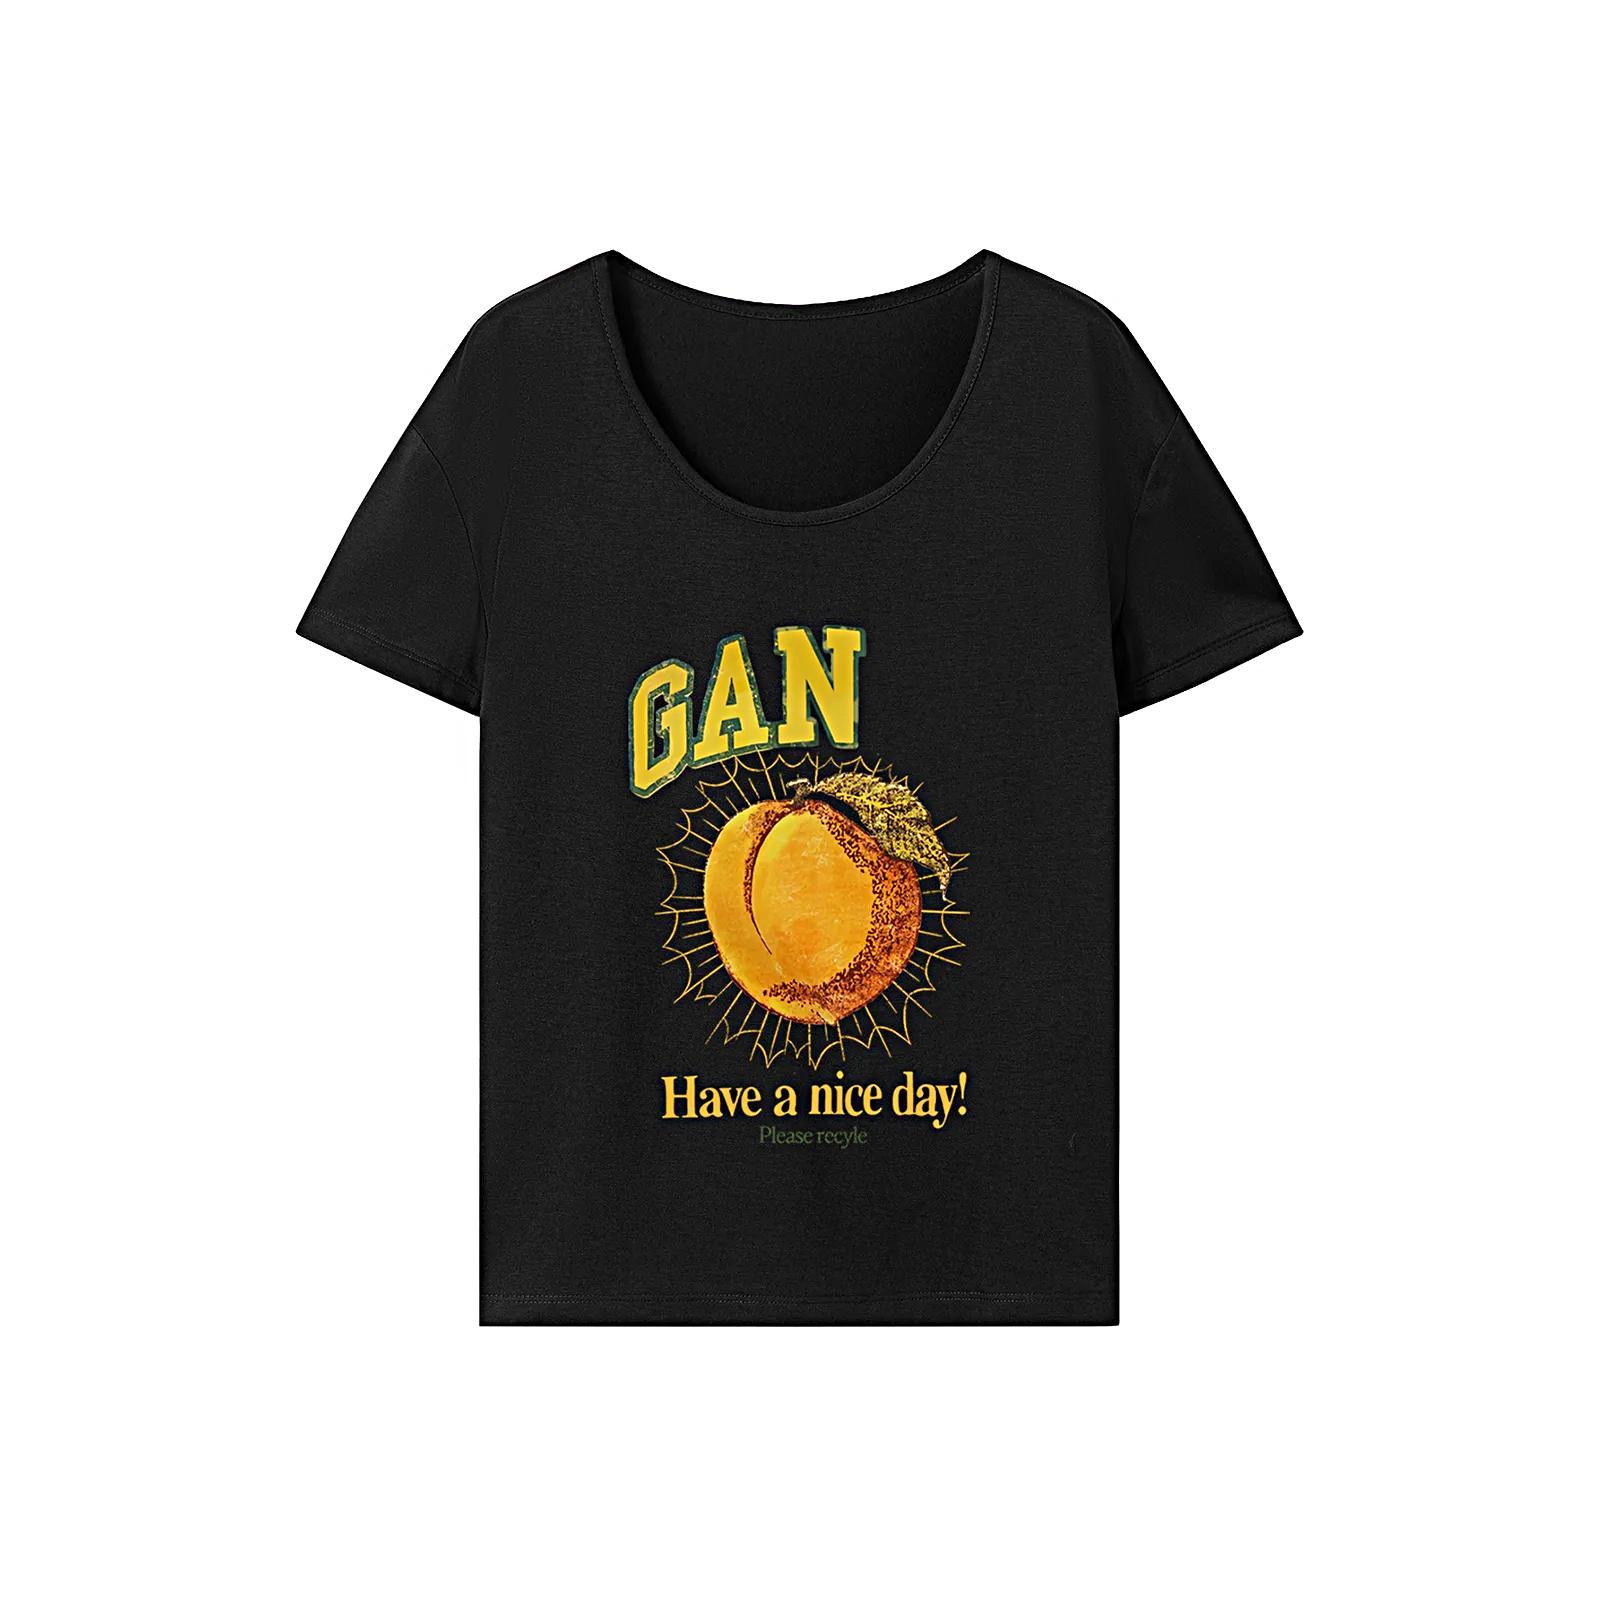 Women's T Shirt Summer Casual Basic Tee Shirt for Commuting Daily Wear Beach XXL